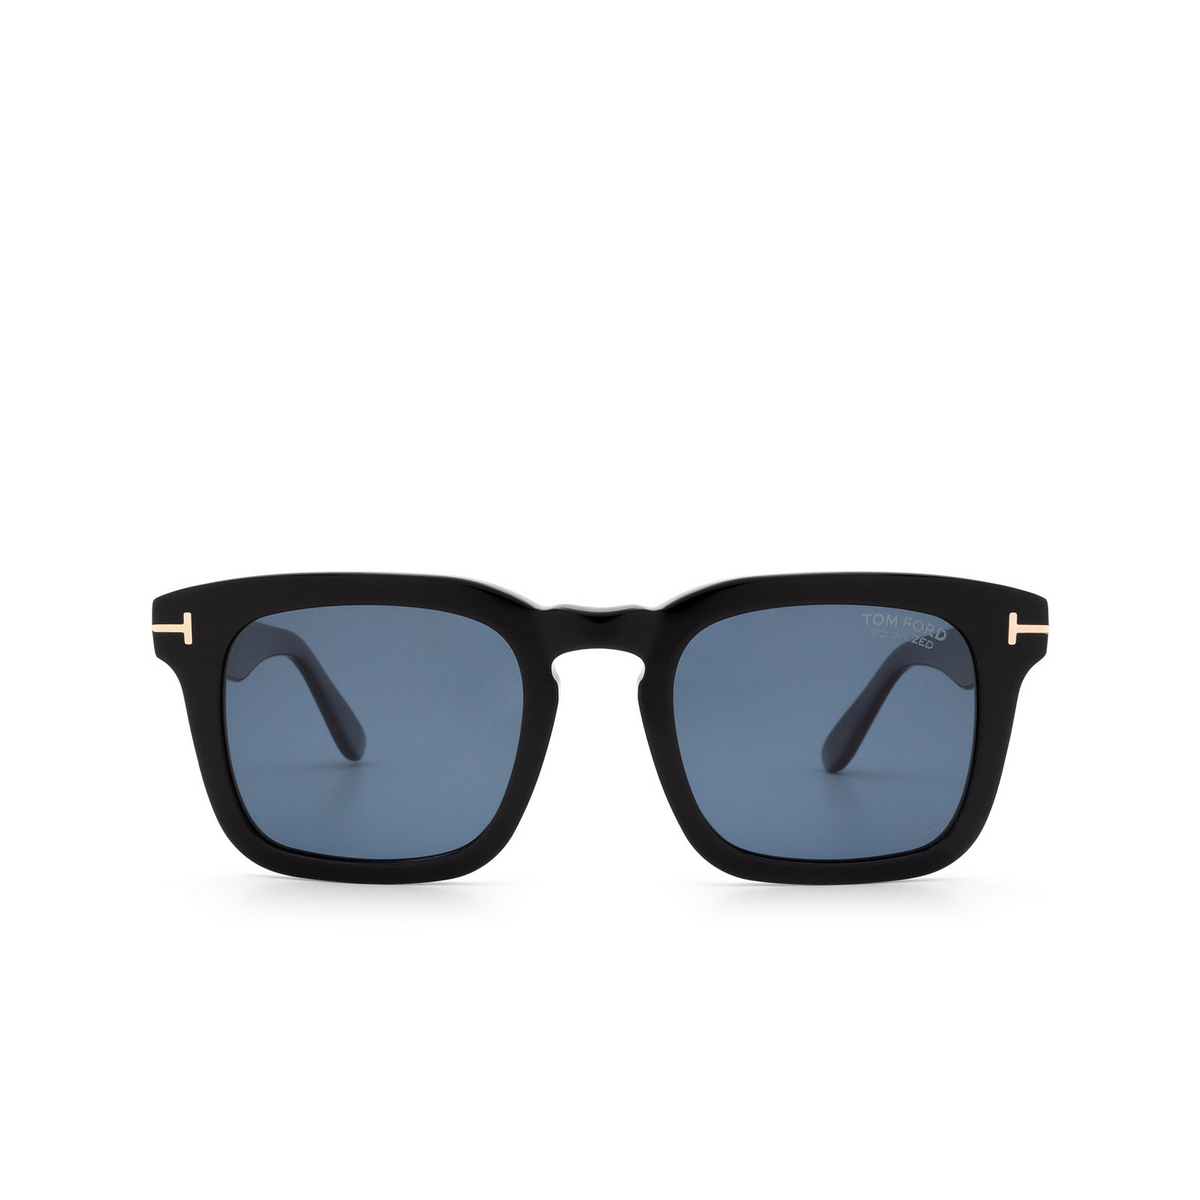 Tom Ford DAX Sunglasses 01V Shiny Black - front view